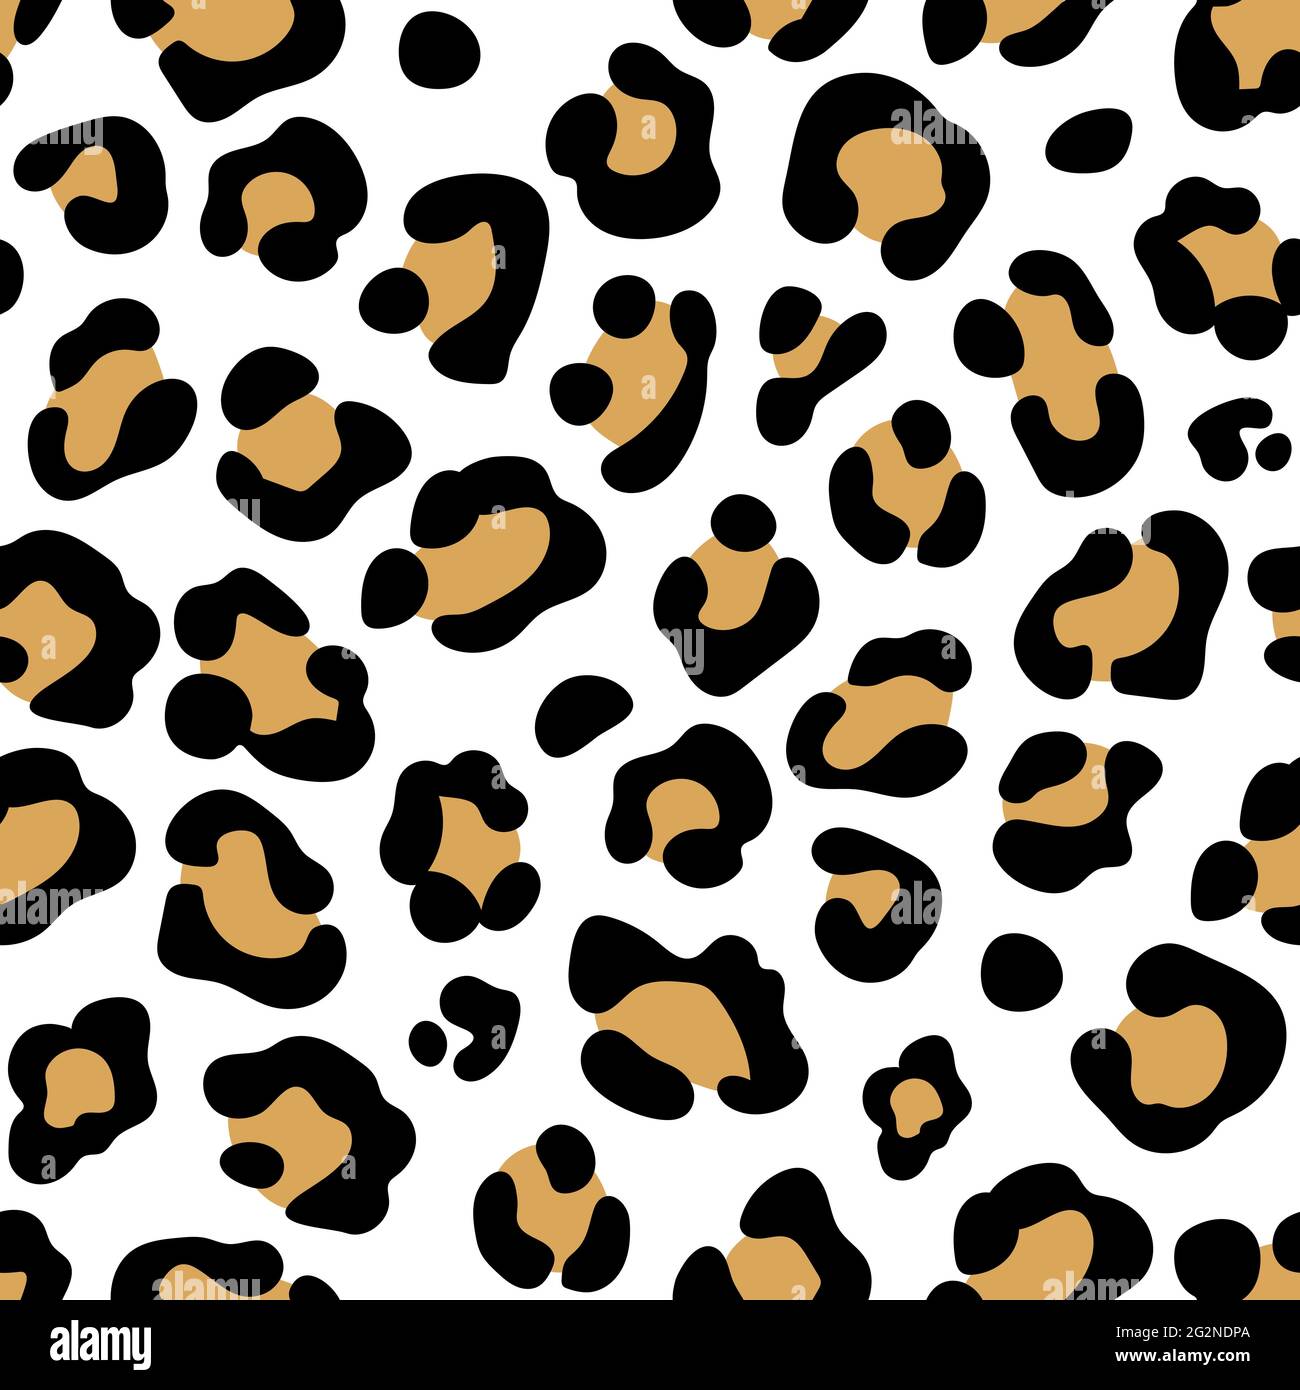 https://c8.alamy.com/comp/2G2NDPA/leopard-print-seamless-leopard-pattern-leopard-spots-abstract-animal-print-vector-2G2NDPA.jpg